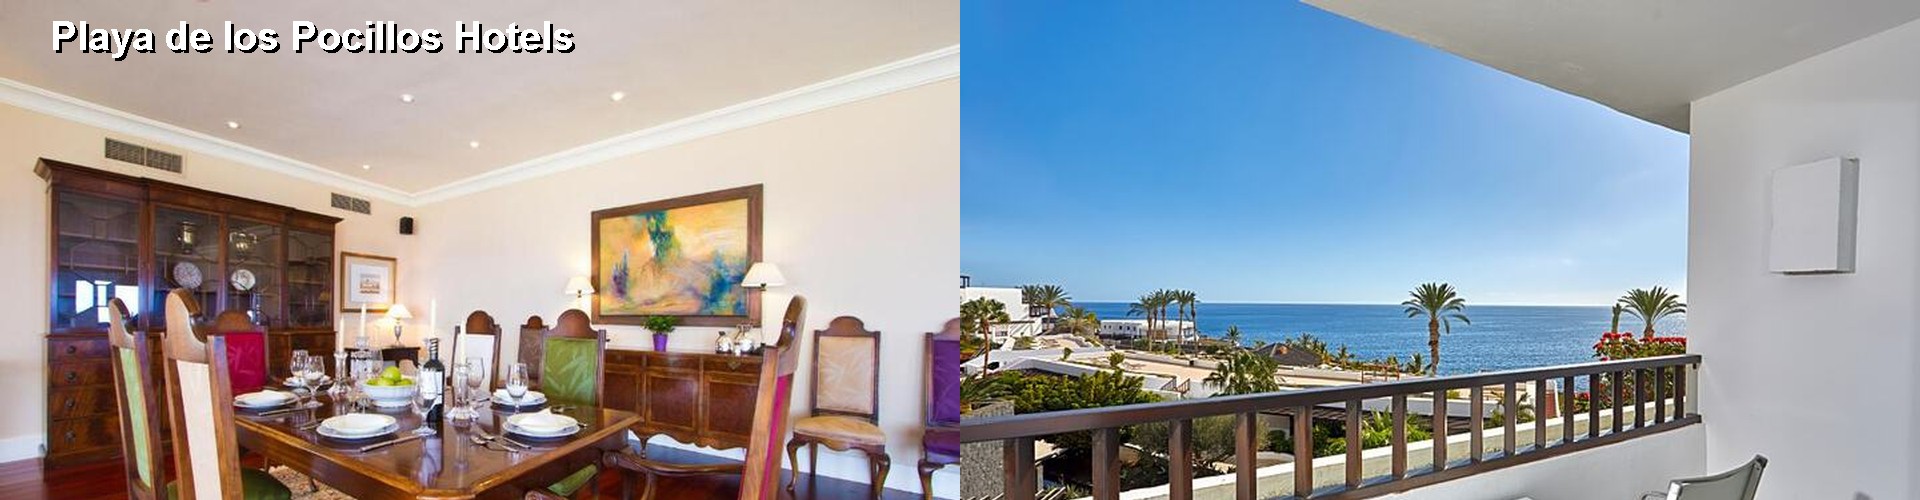 5 Best Hotels near Playa de los Pocillos